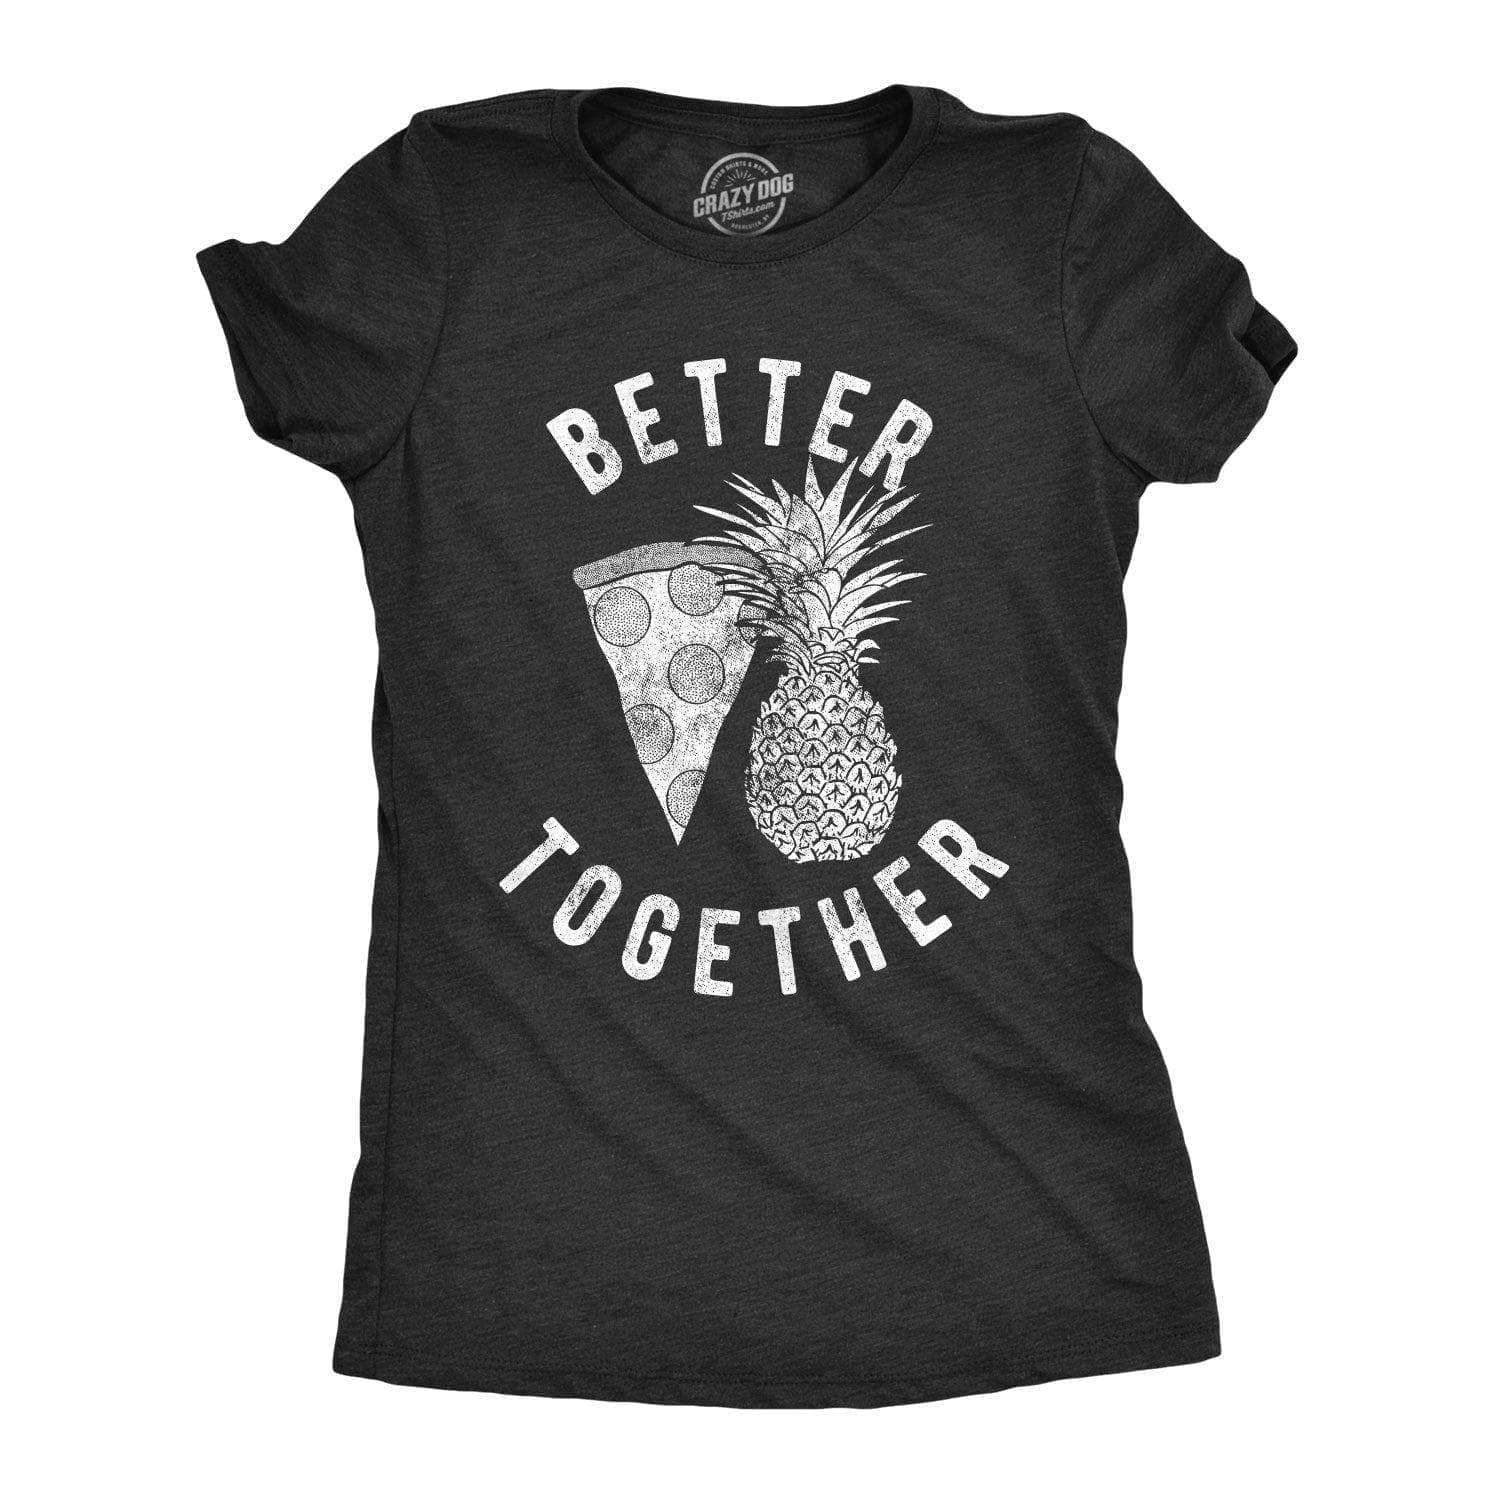 Better Together Women's Tshirt - Crazy Dog T-Shirts